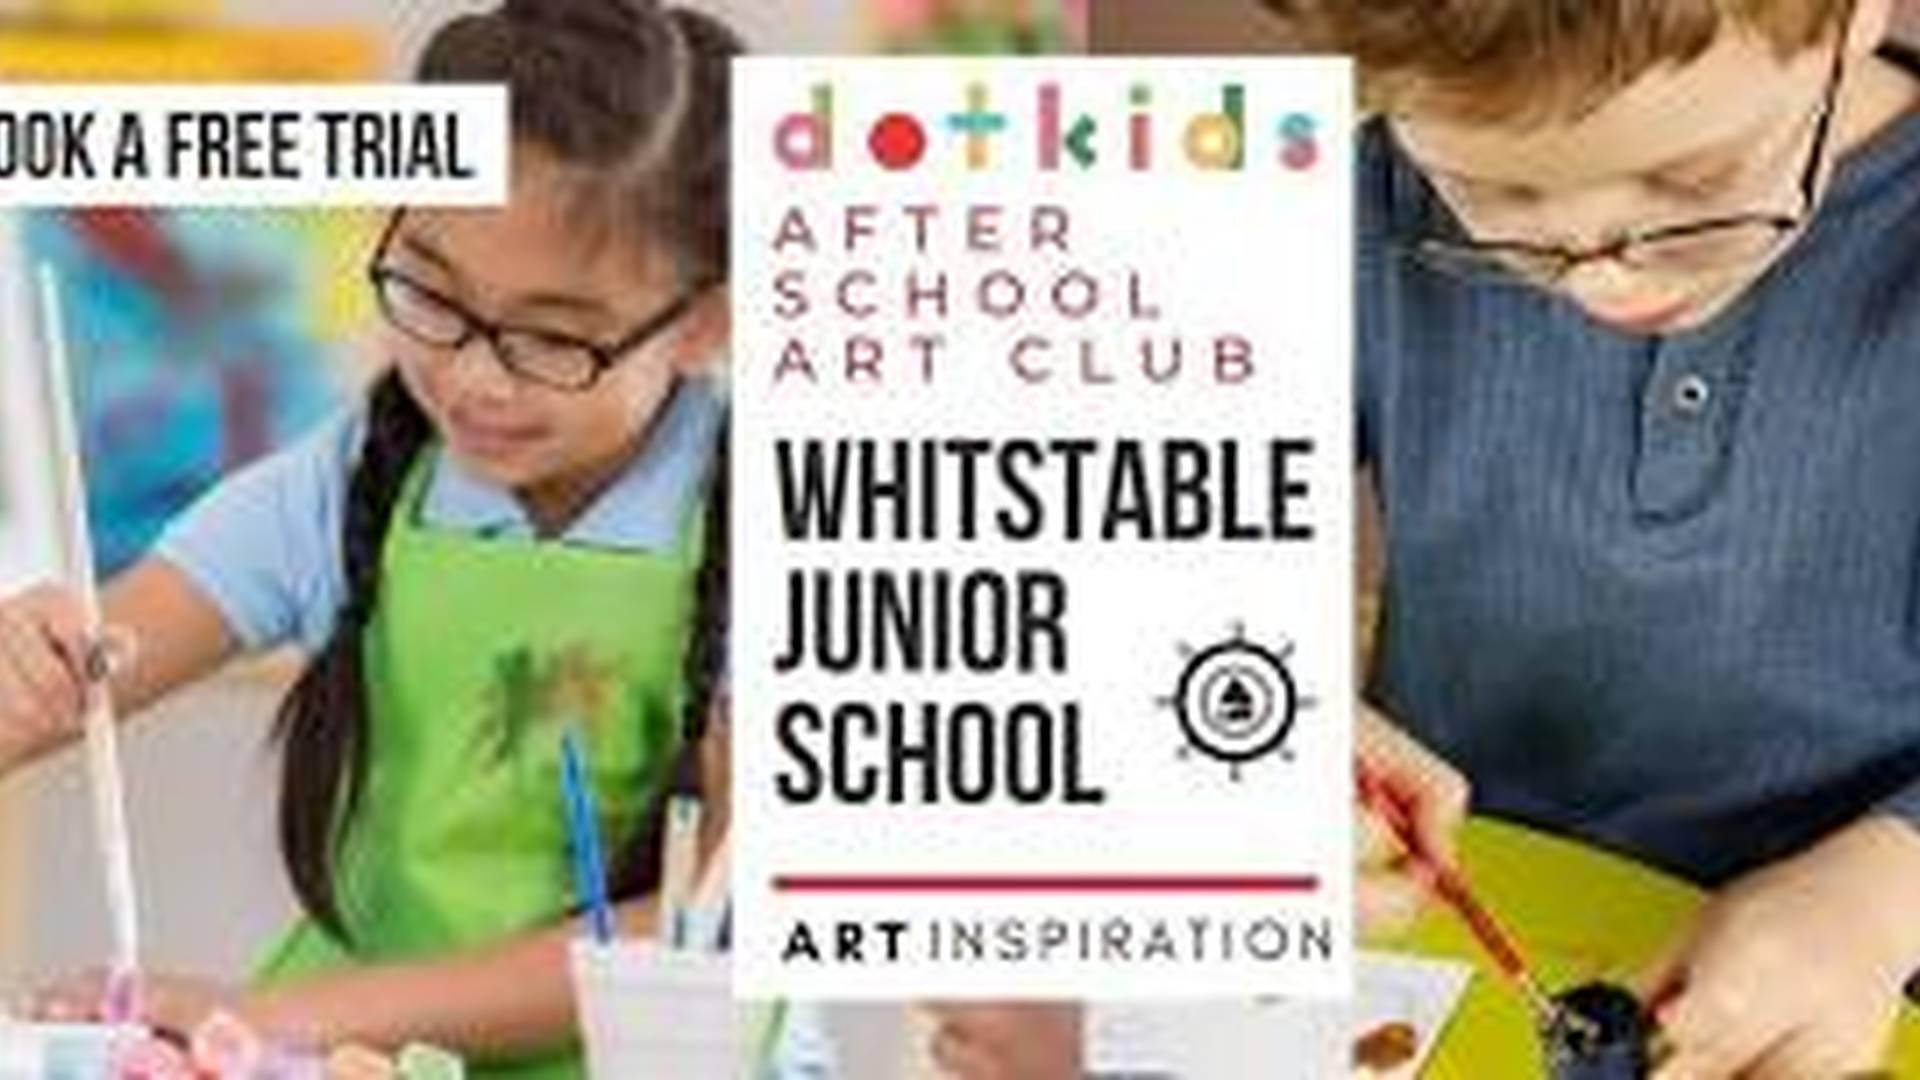 Dot Kids Art Club At Whitstable Junior School photo